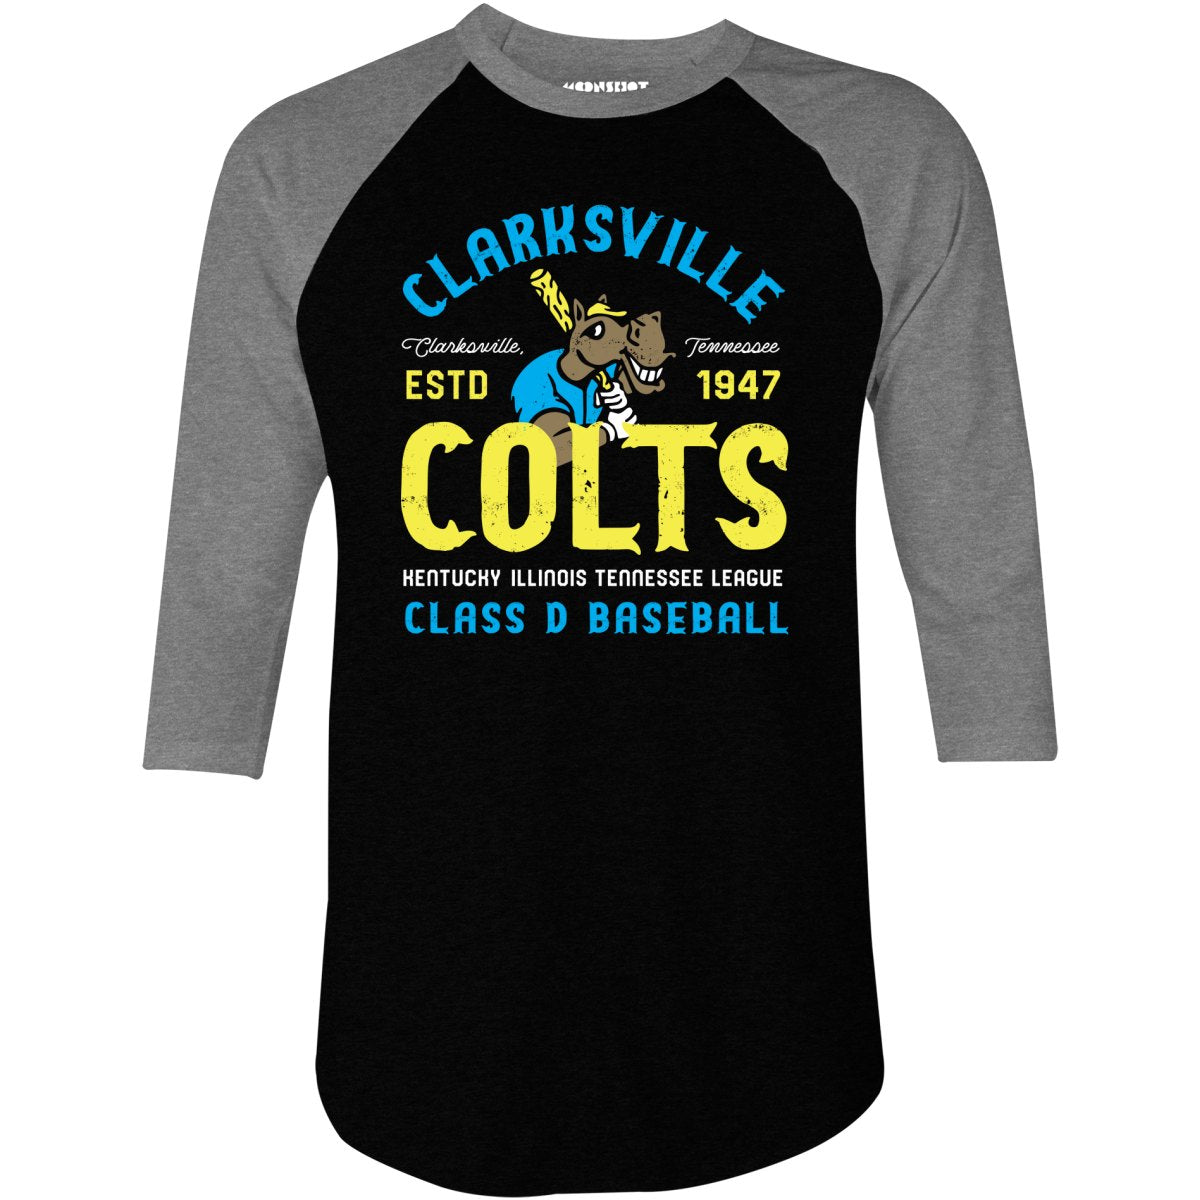 Clarksville Colts - Tennessee - Vintage Defunct Baseball Teams - 3/4 Sleeve Raglan T-Shirt